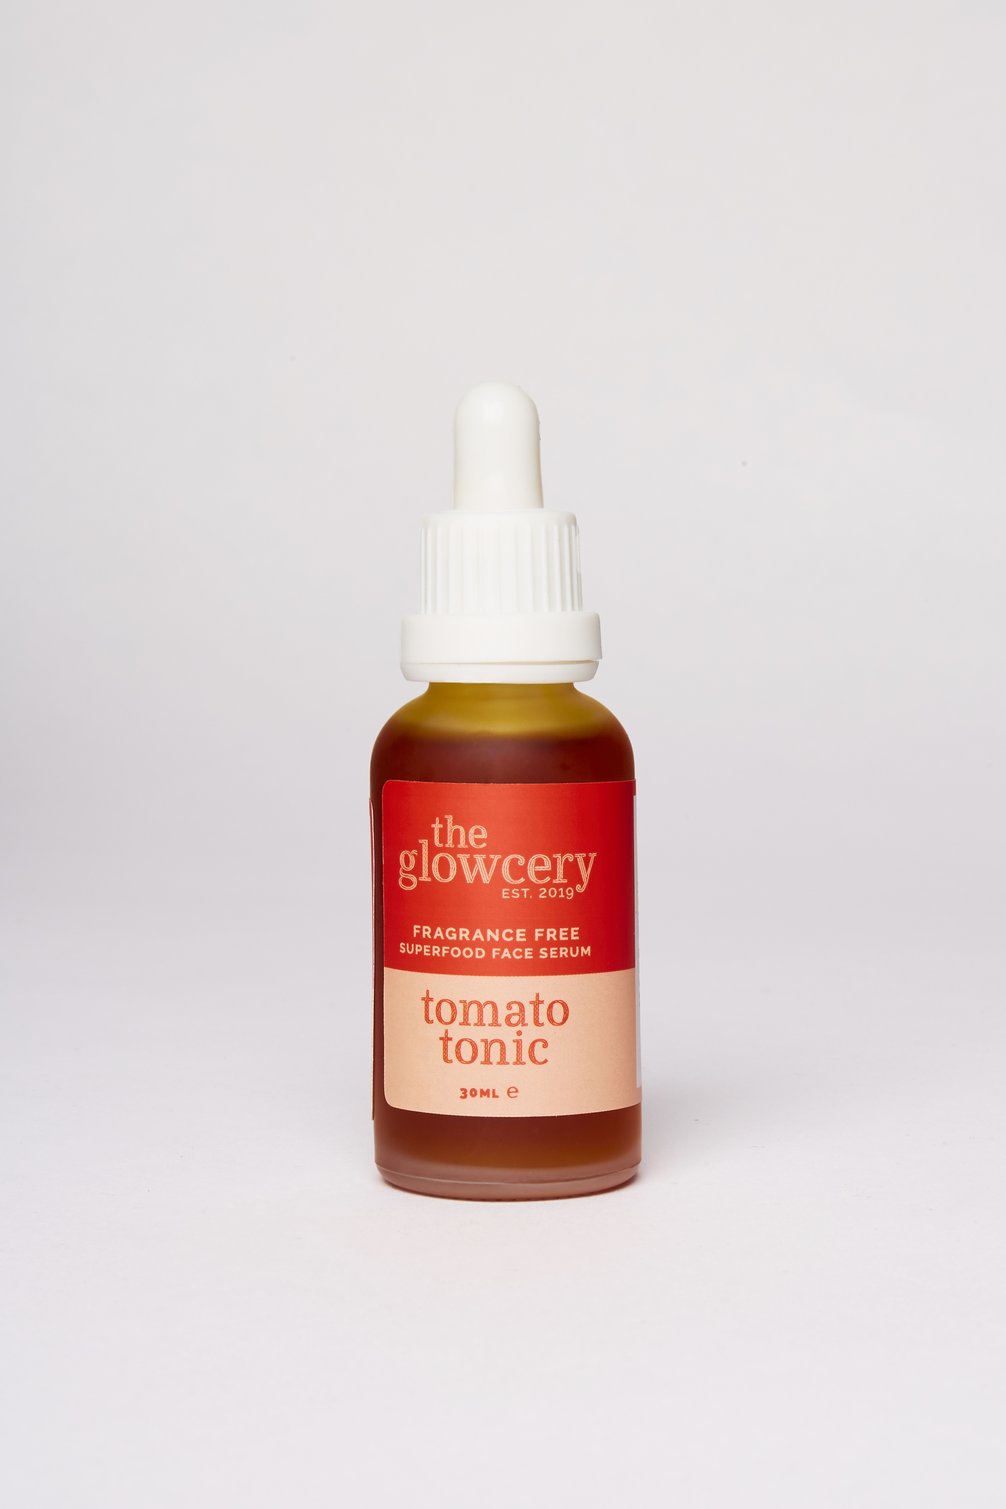 The Glowcery Tomato Tonic Fragrance-Free Superfood Serum